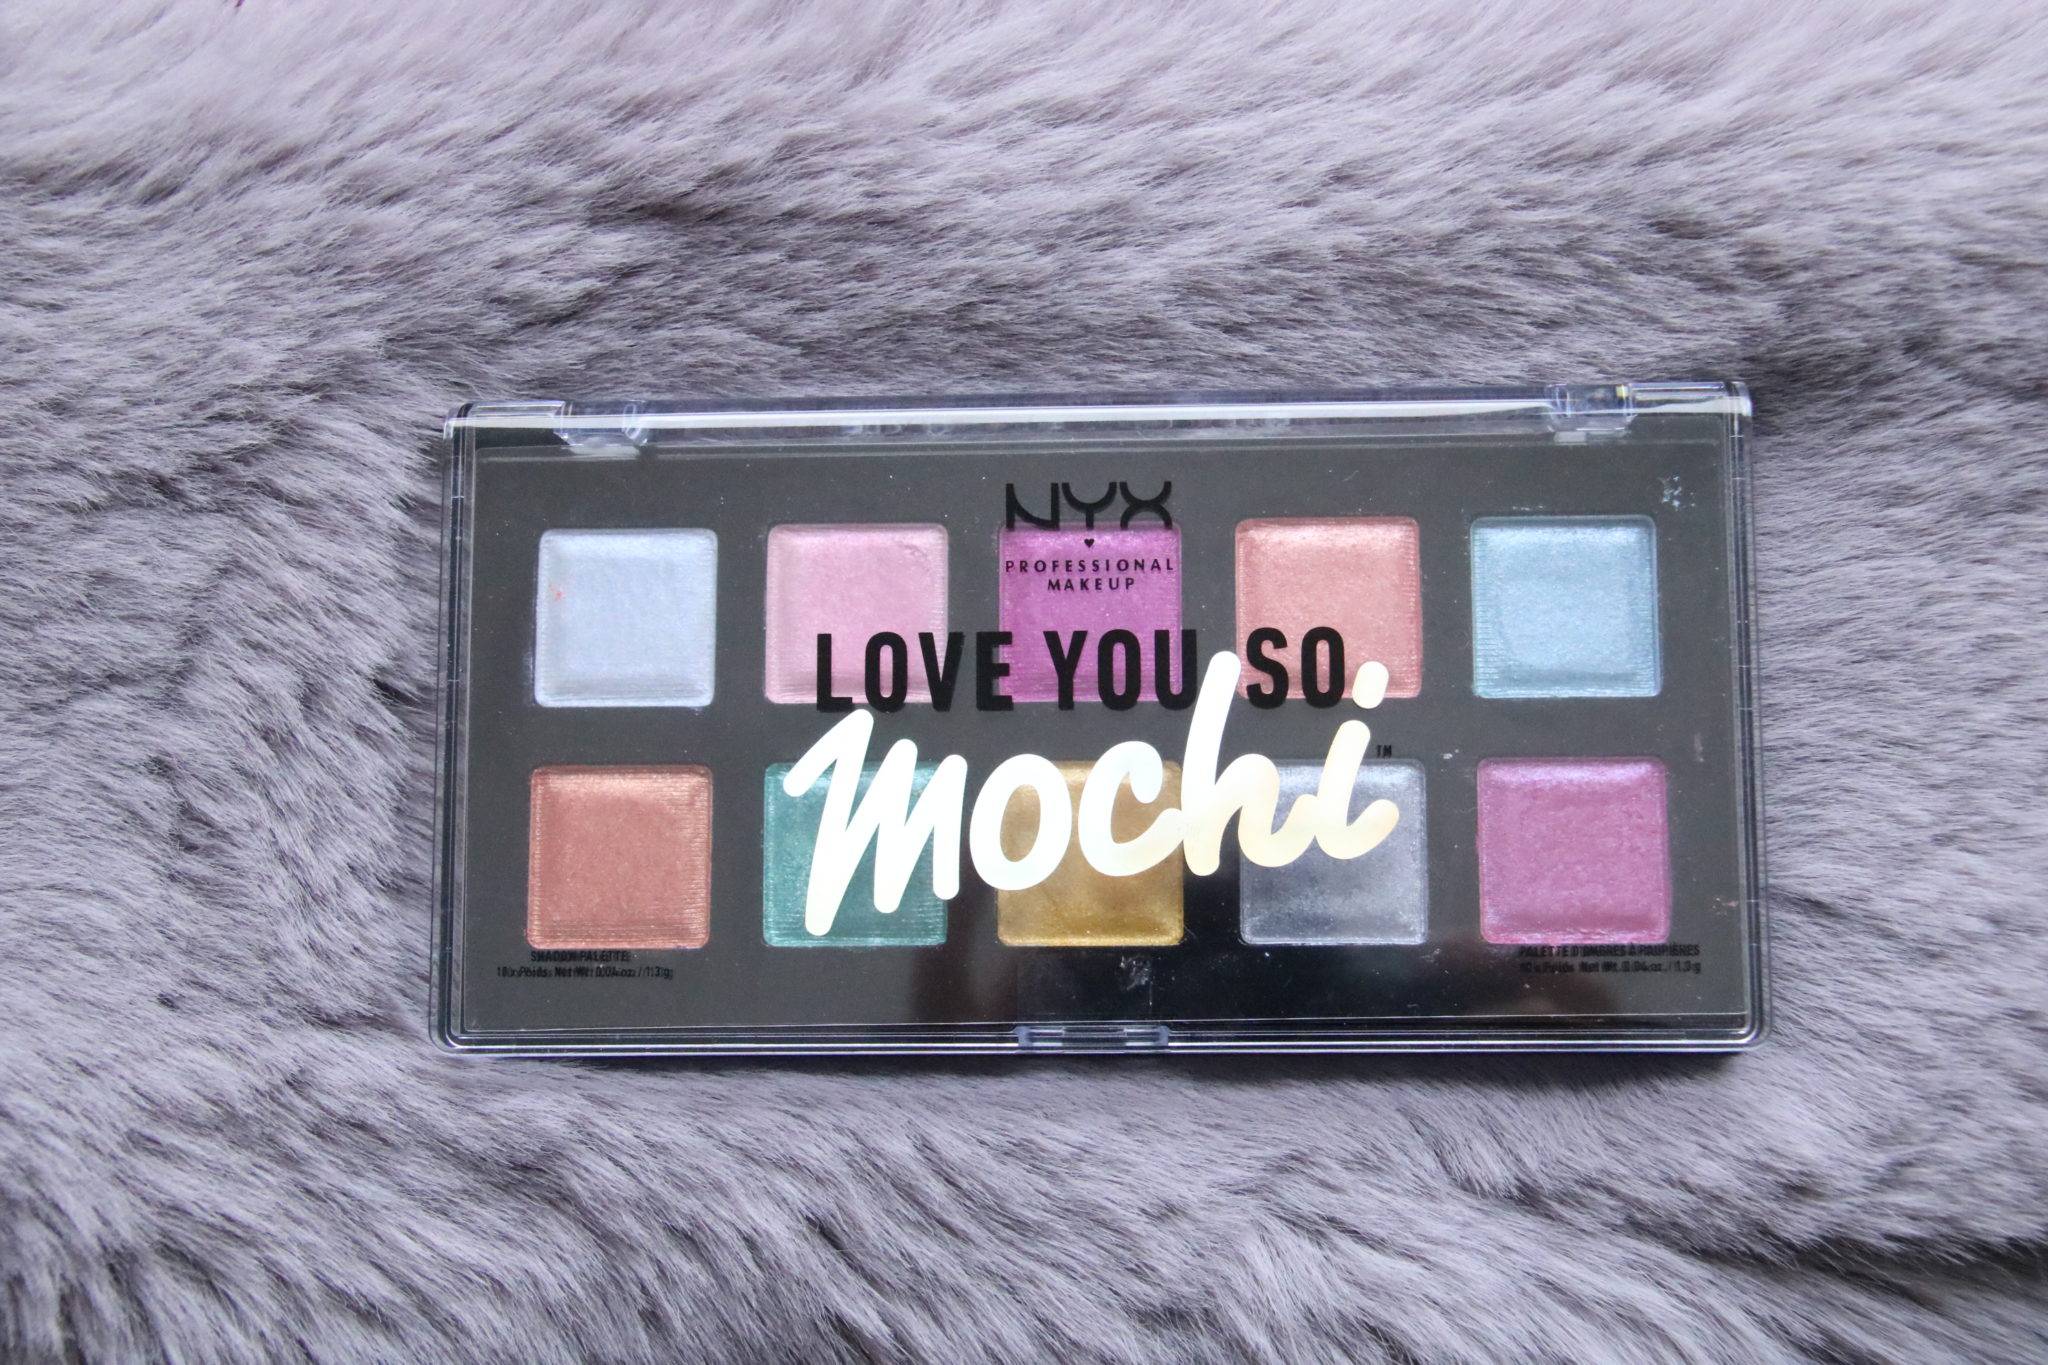 Обзор love you so mochi eyeshadow palette sleek and chic от nyx